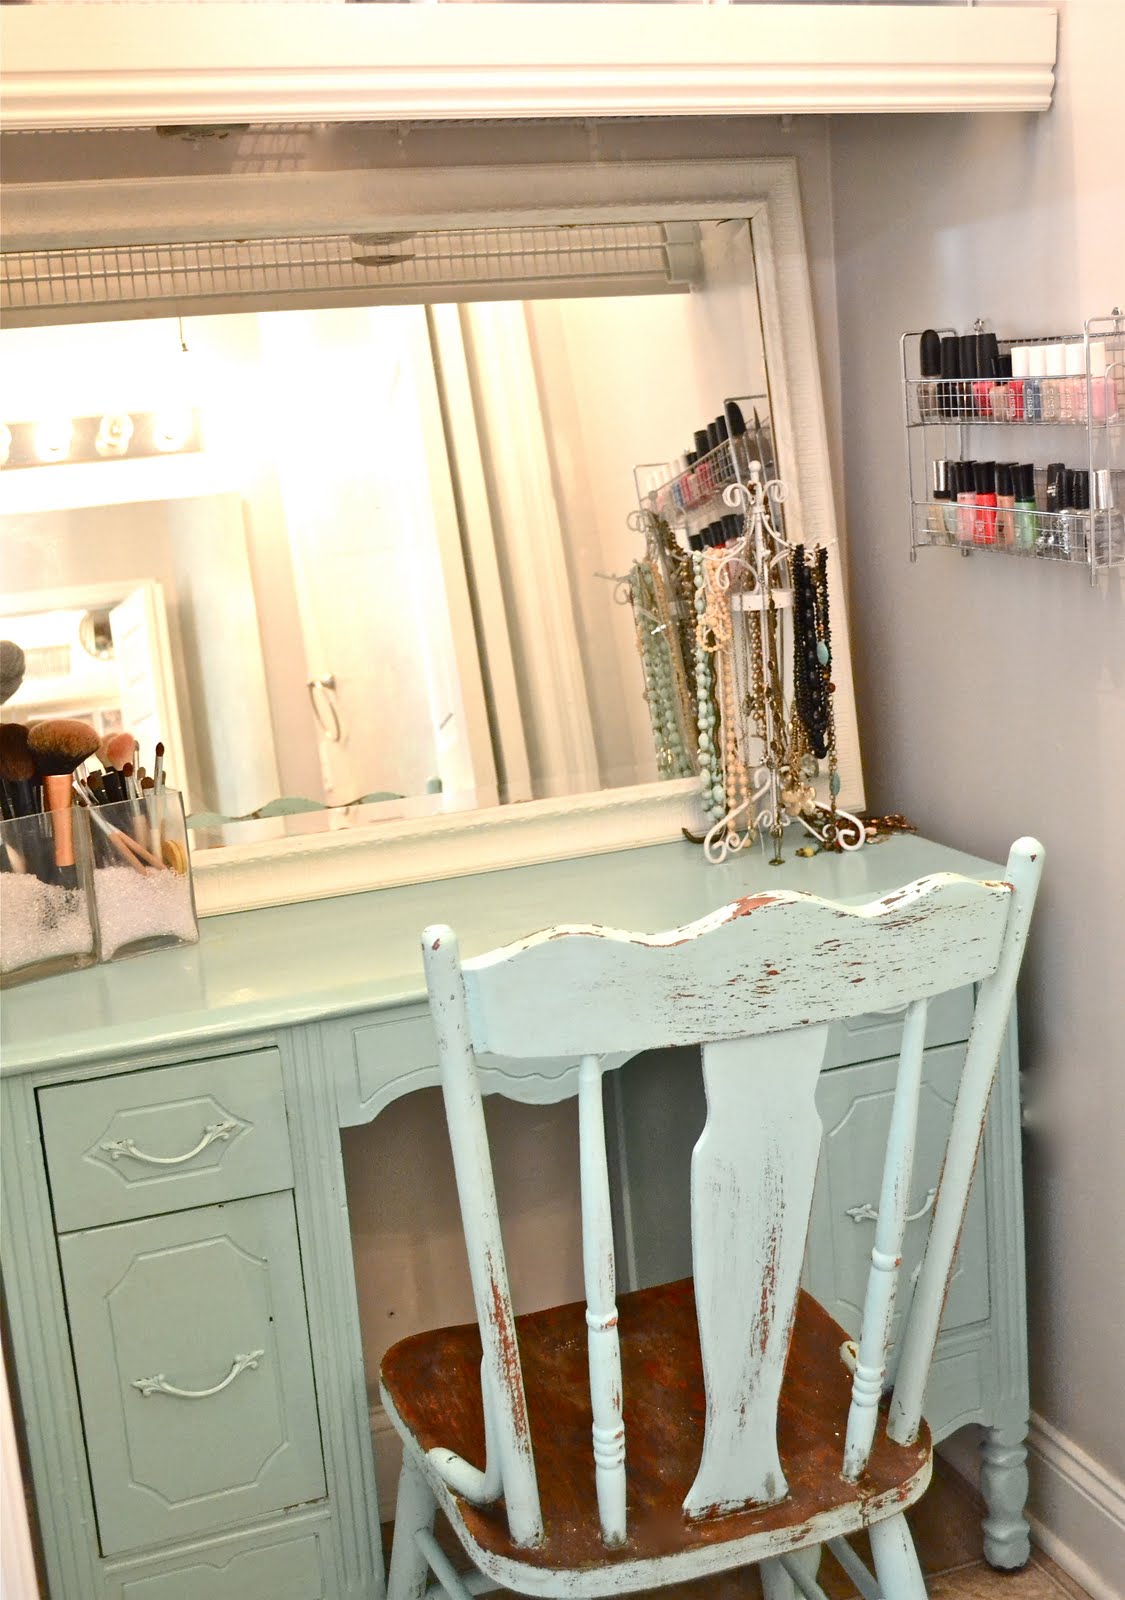 I hung my nail polish organizer in my vanity closet